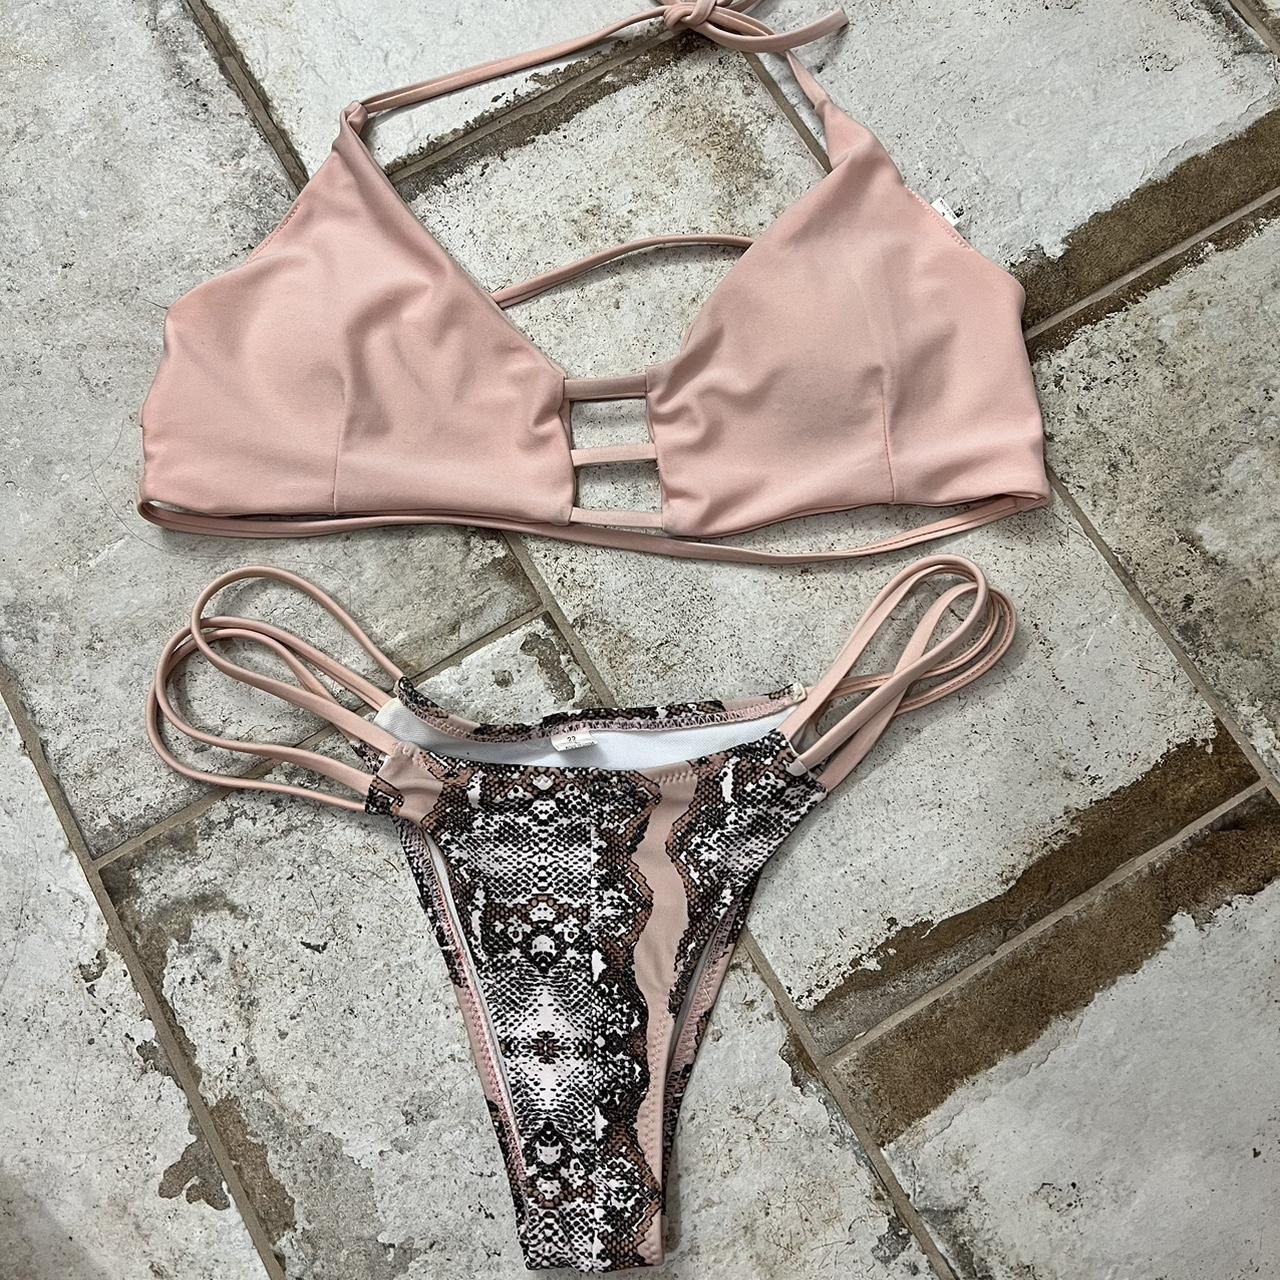 Women's Pink and Tan Bikinis-and-tankini-sets | Depop